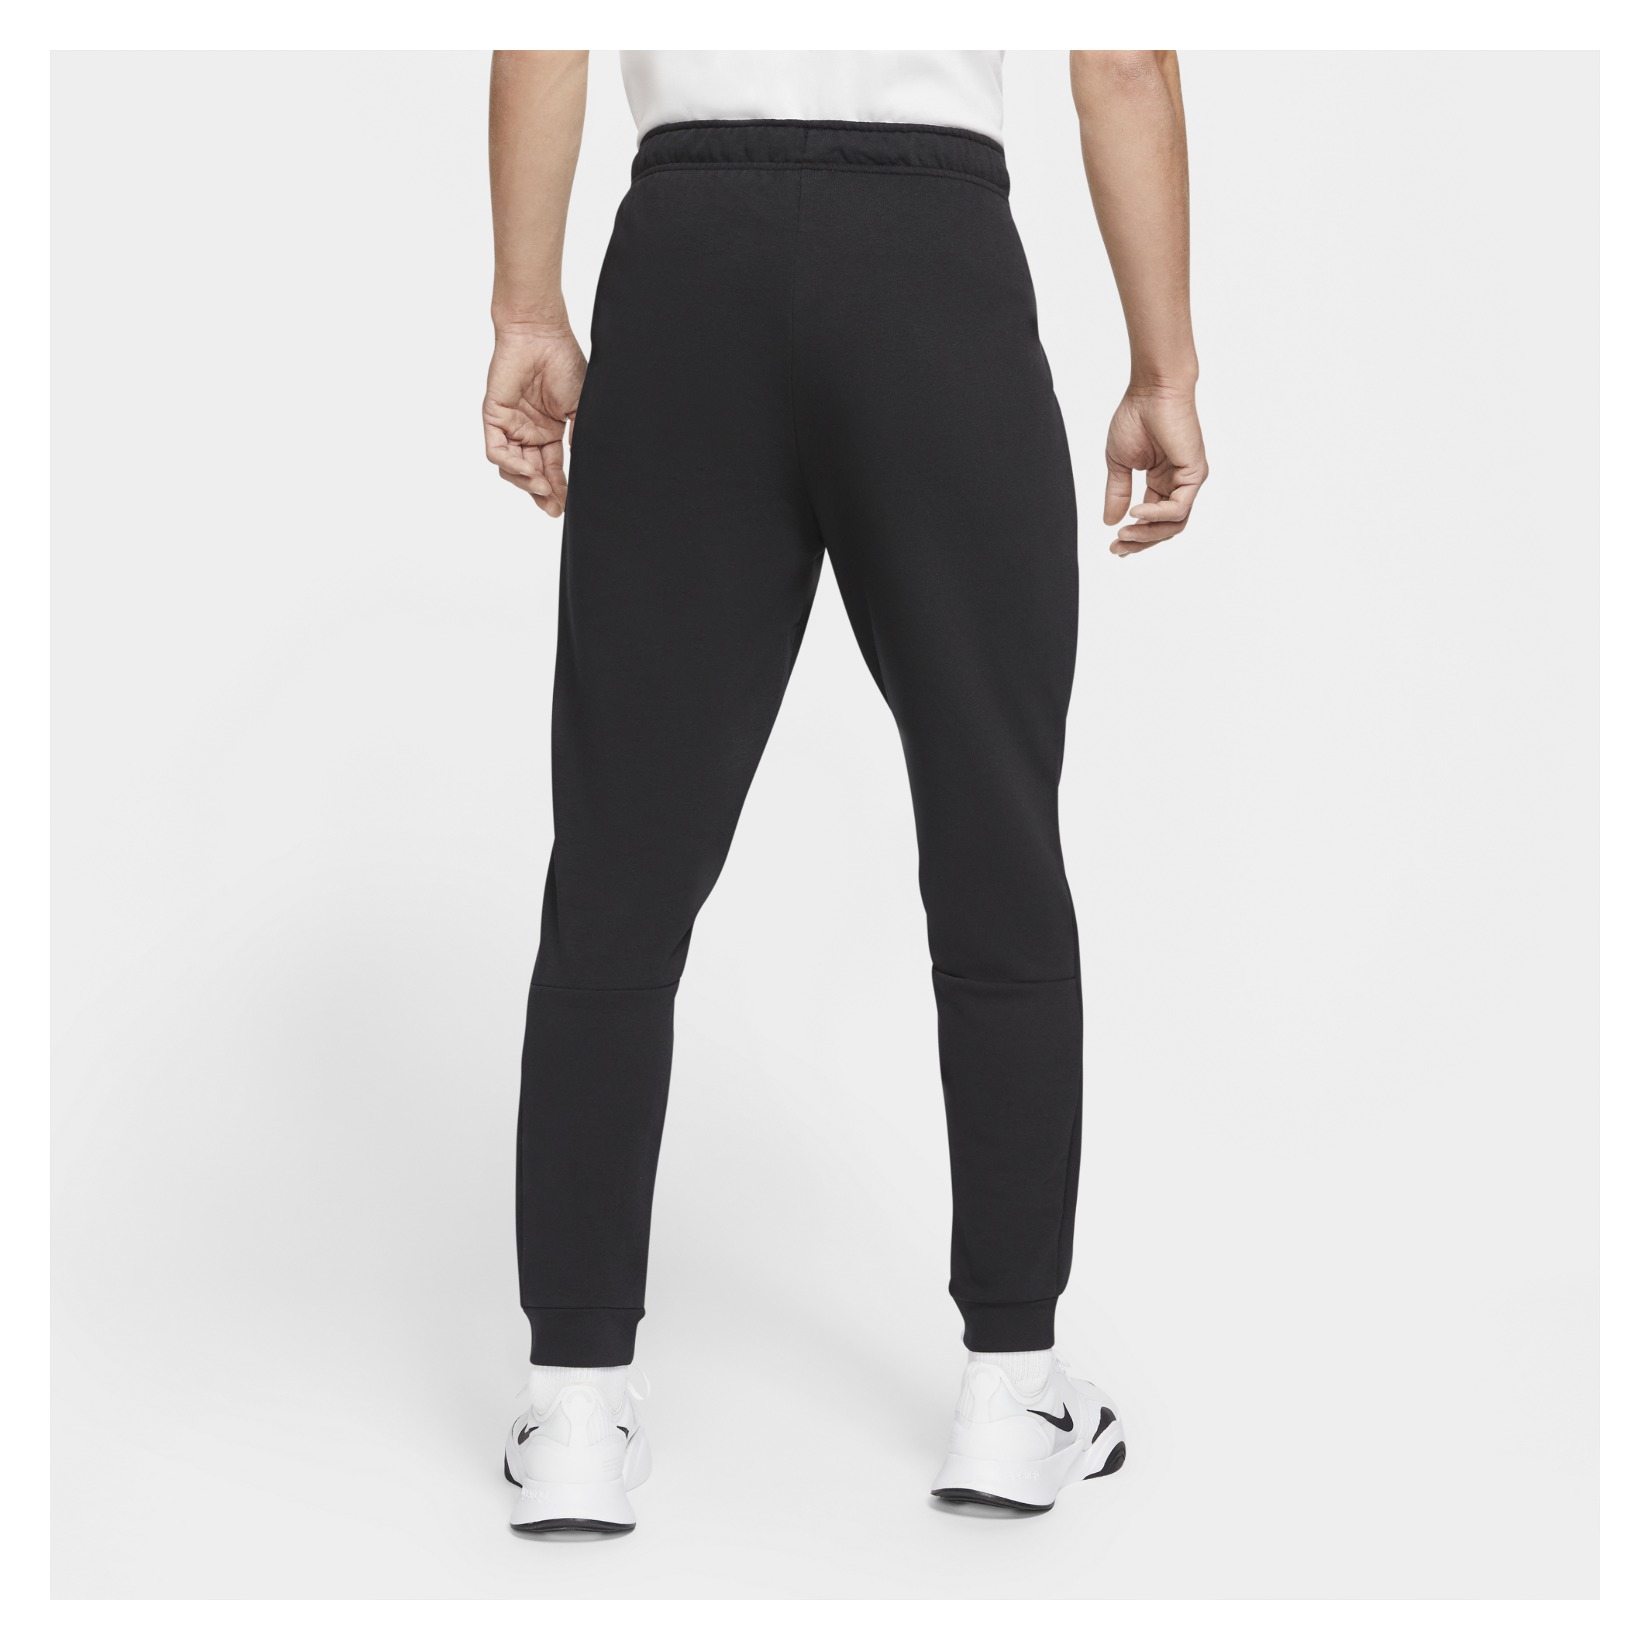 Nike Dri-FIT Tapered Training Pants - Kitlocker.com